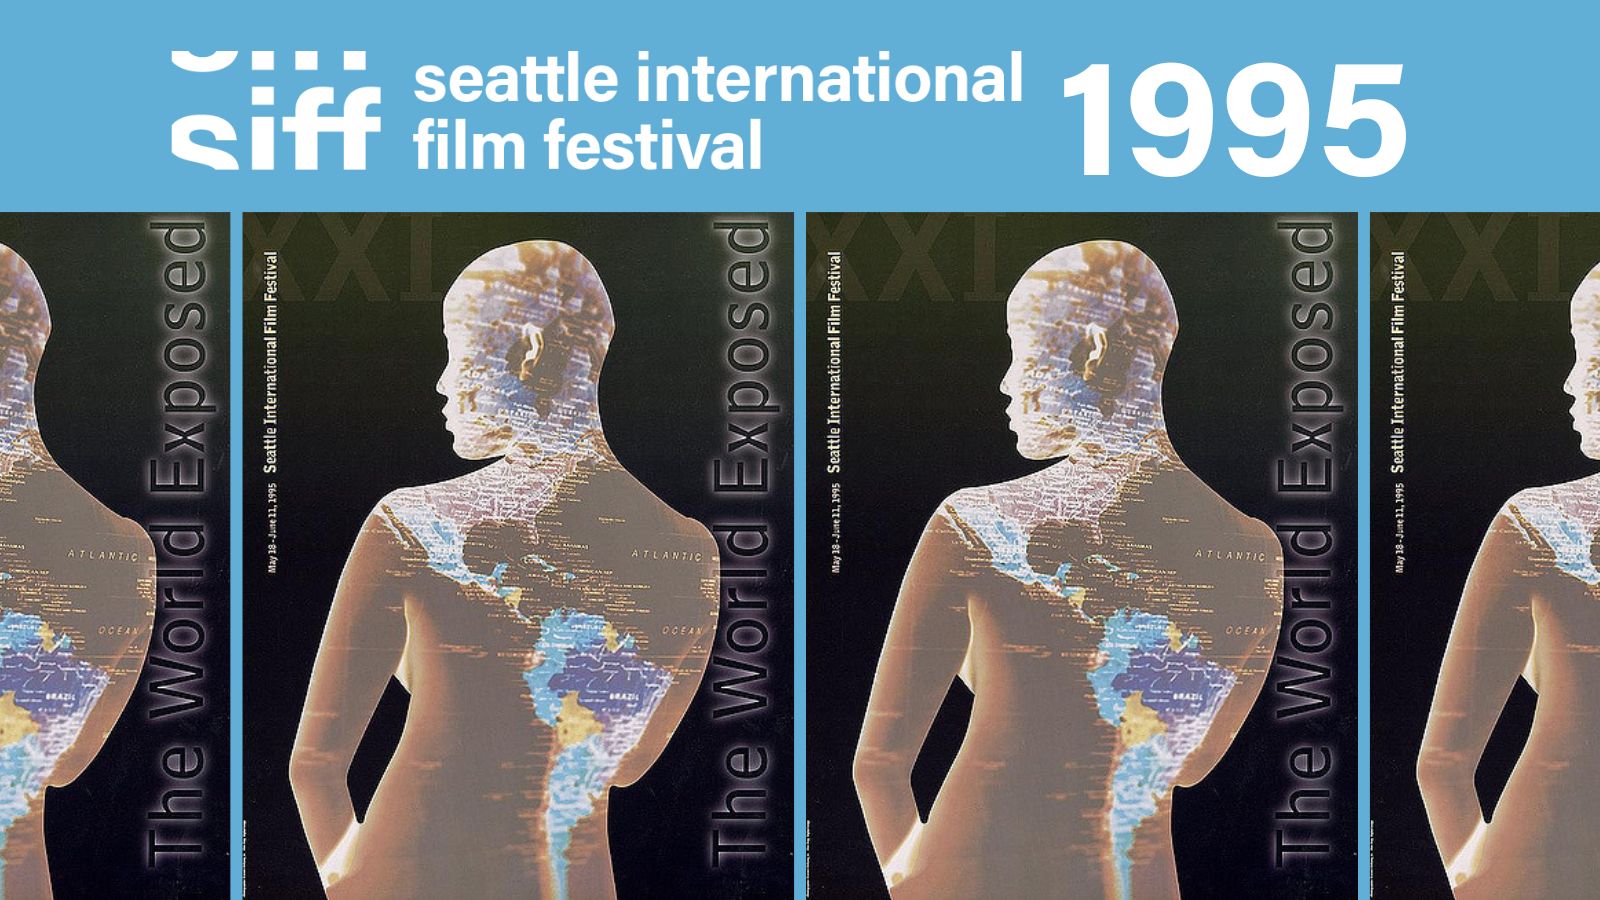 Seattle International Film Festival 1995